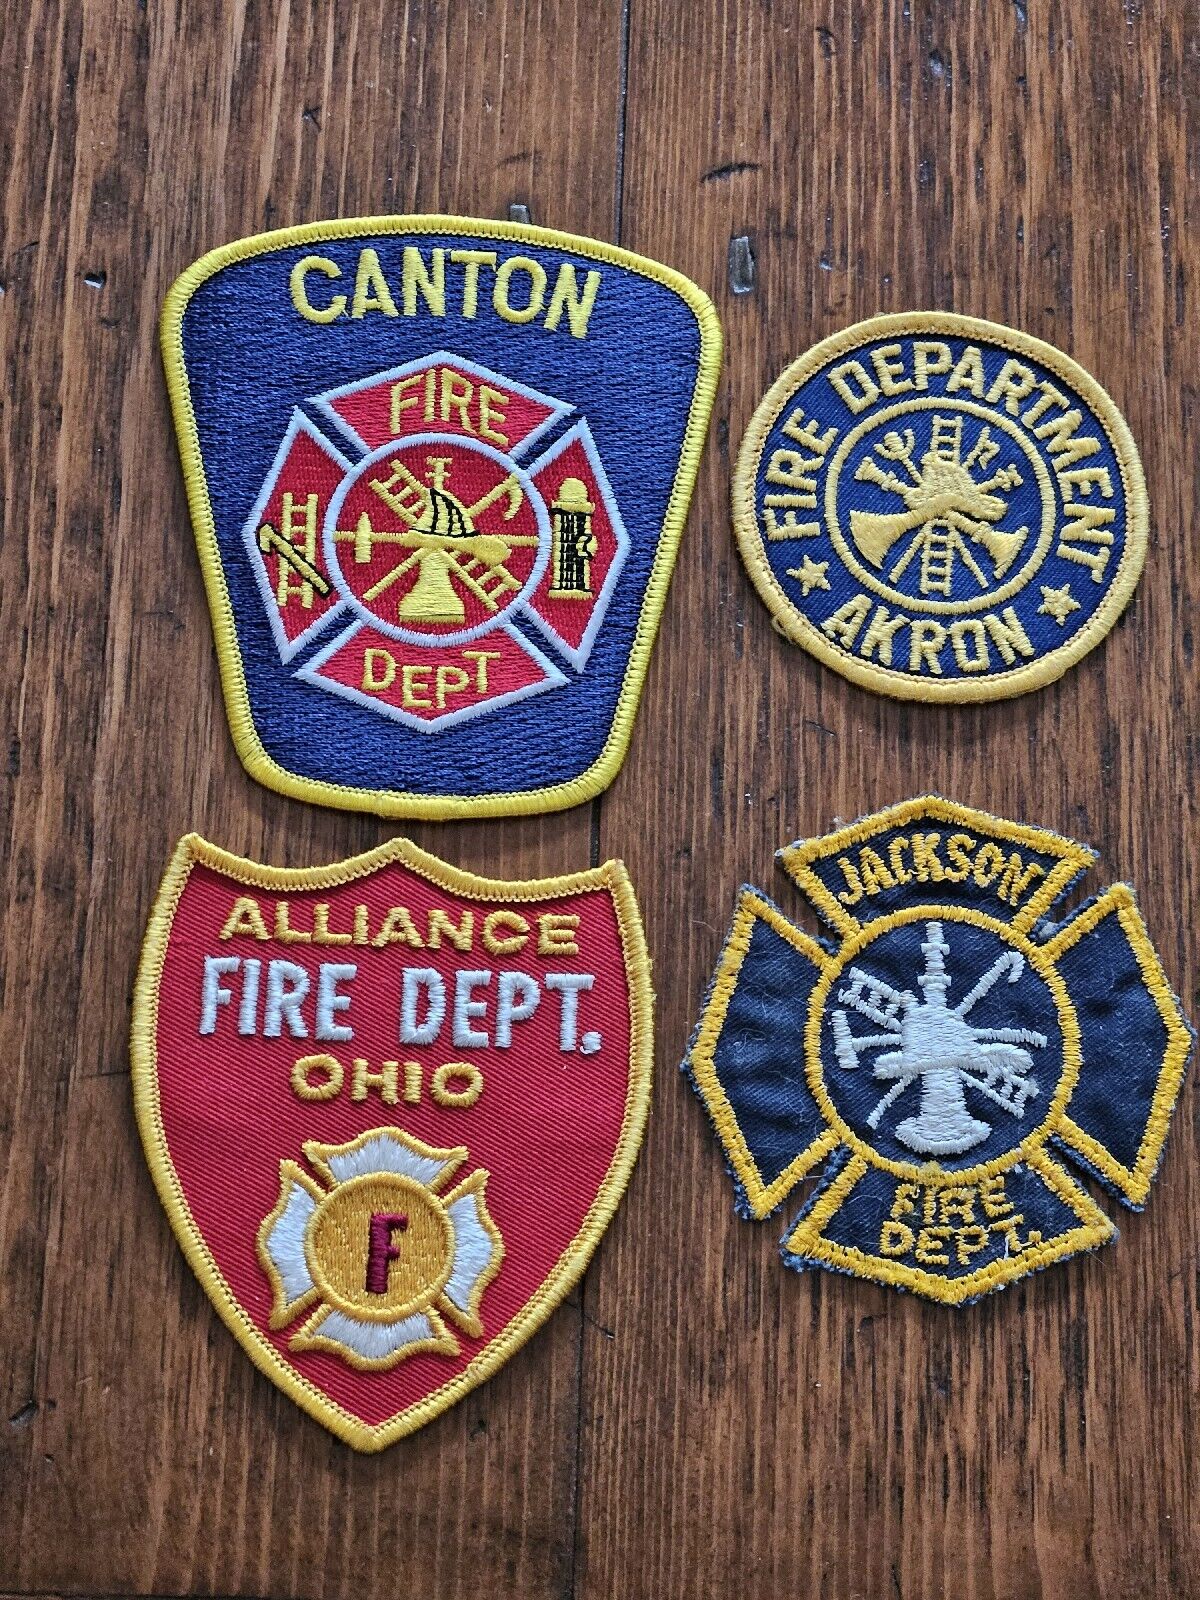 4 Vintage Ohio Fire Dept Patches - Canton Akron Alliance Hackson Twp.